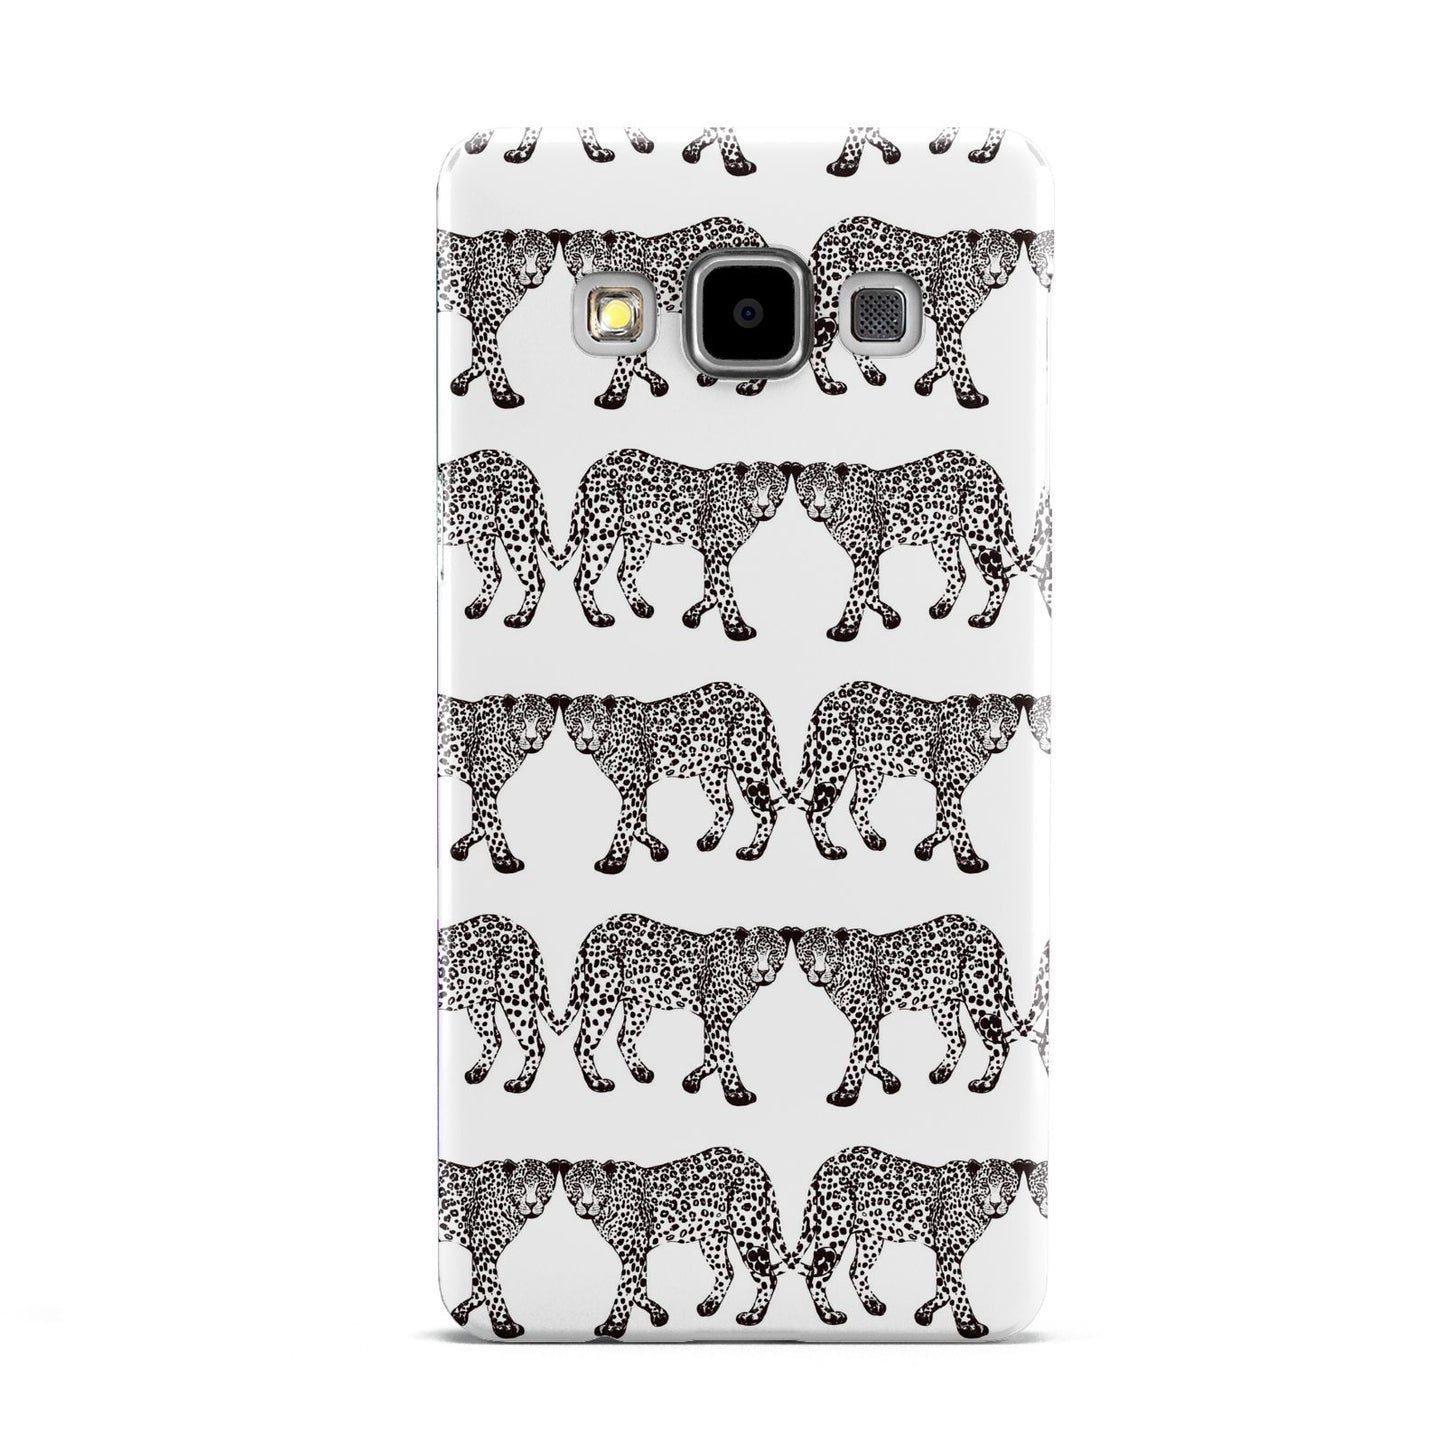 Monochrome Mirrored Leopard Print Samsung Galaxy A5 Case